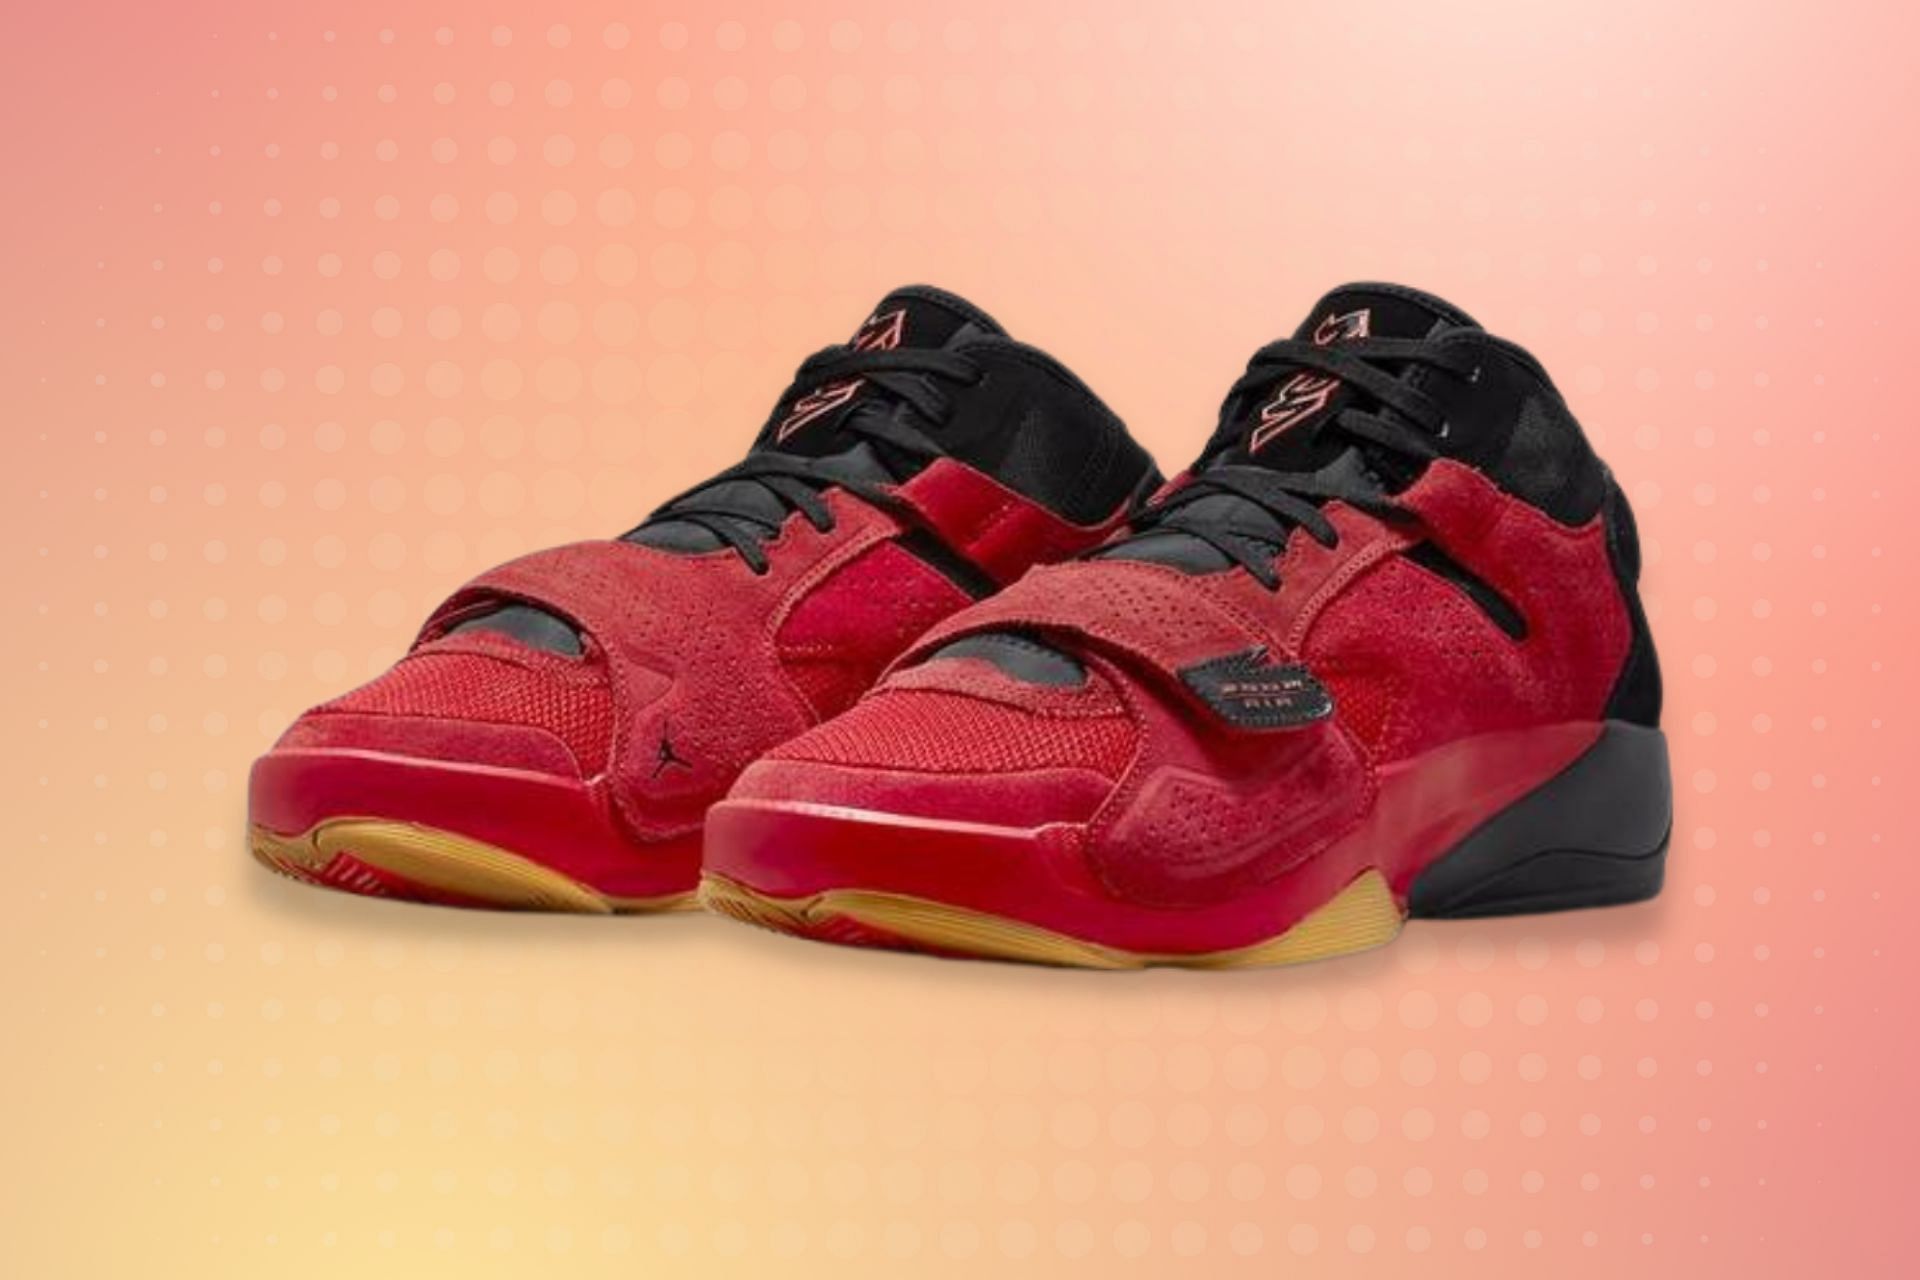 Jordan Zion 2 Red Suede shoes (Image via Nike)